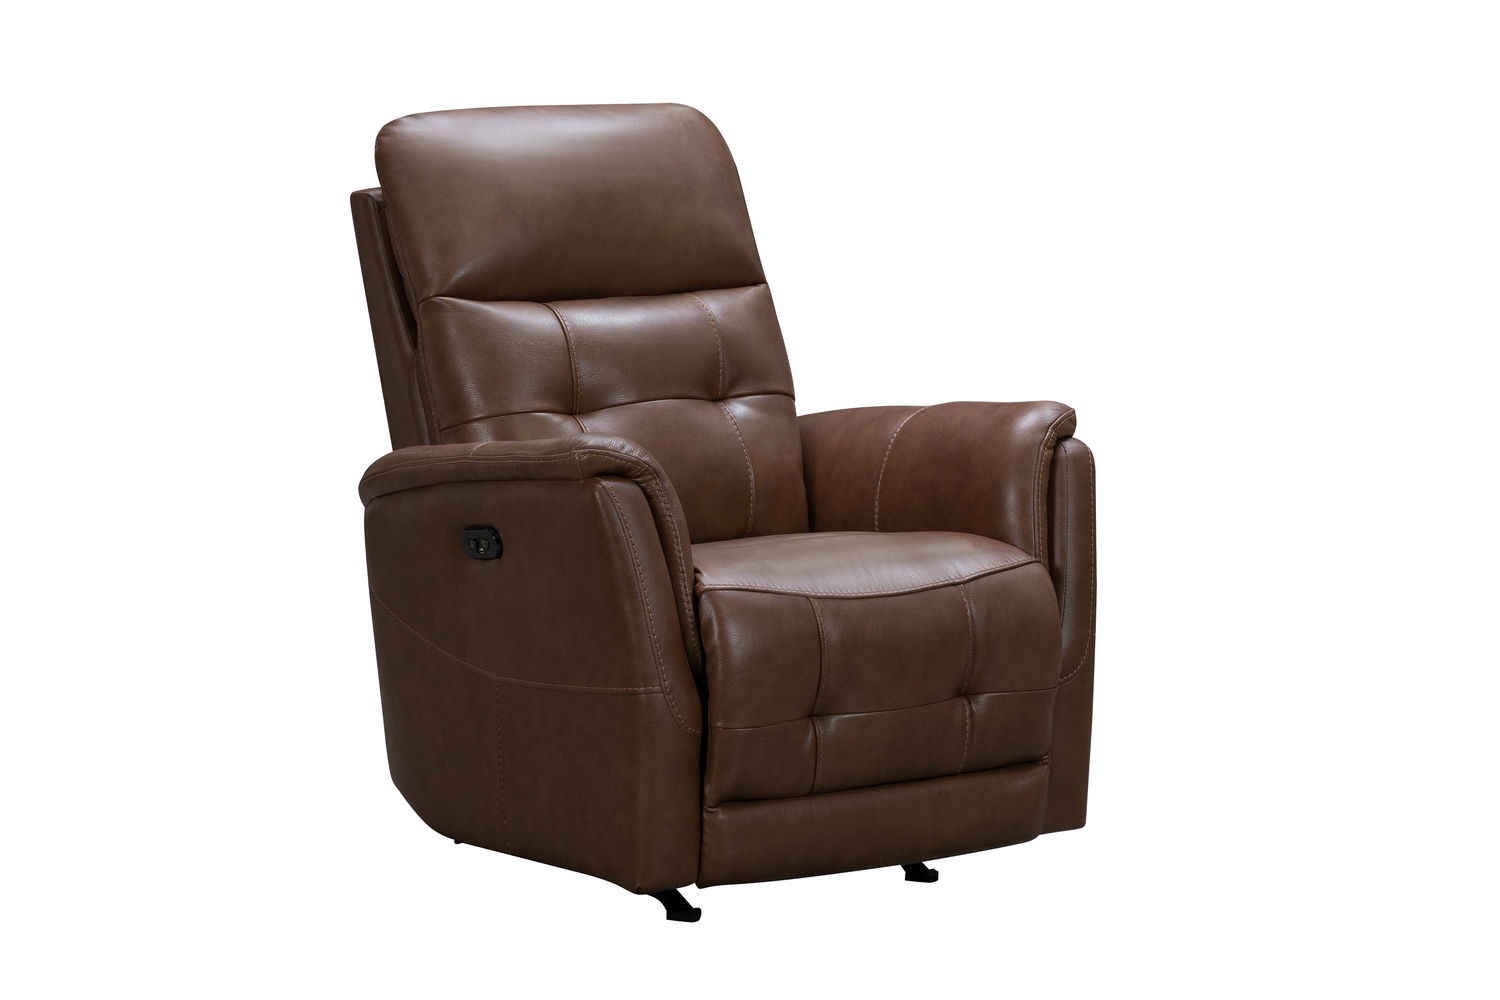 Barcalounger Horton Power Rocker Recliner Chair with Power Head Rest - Spence Caramel/Leather match